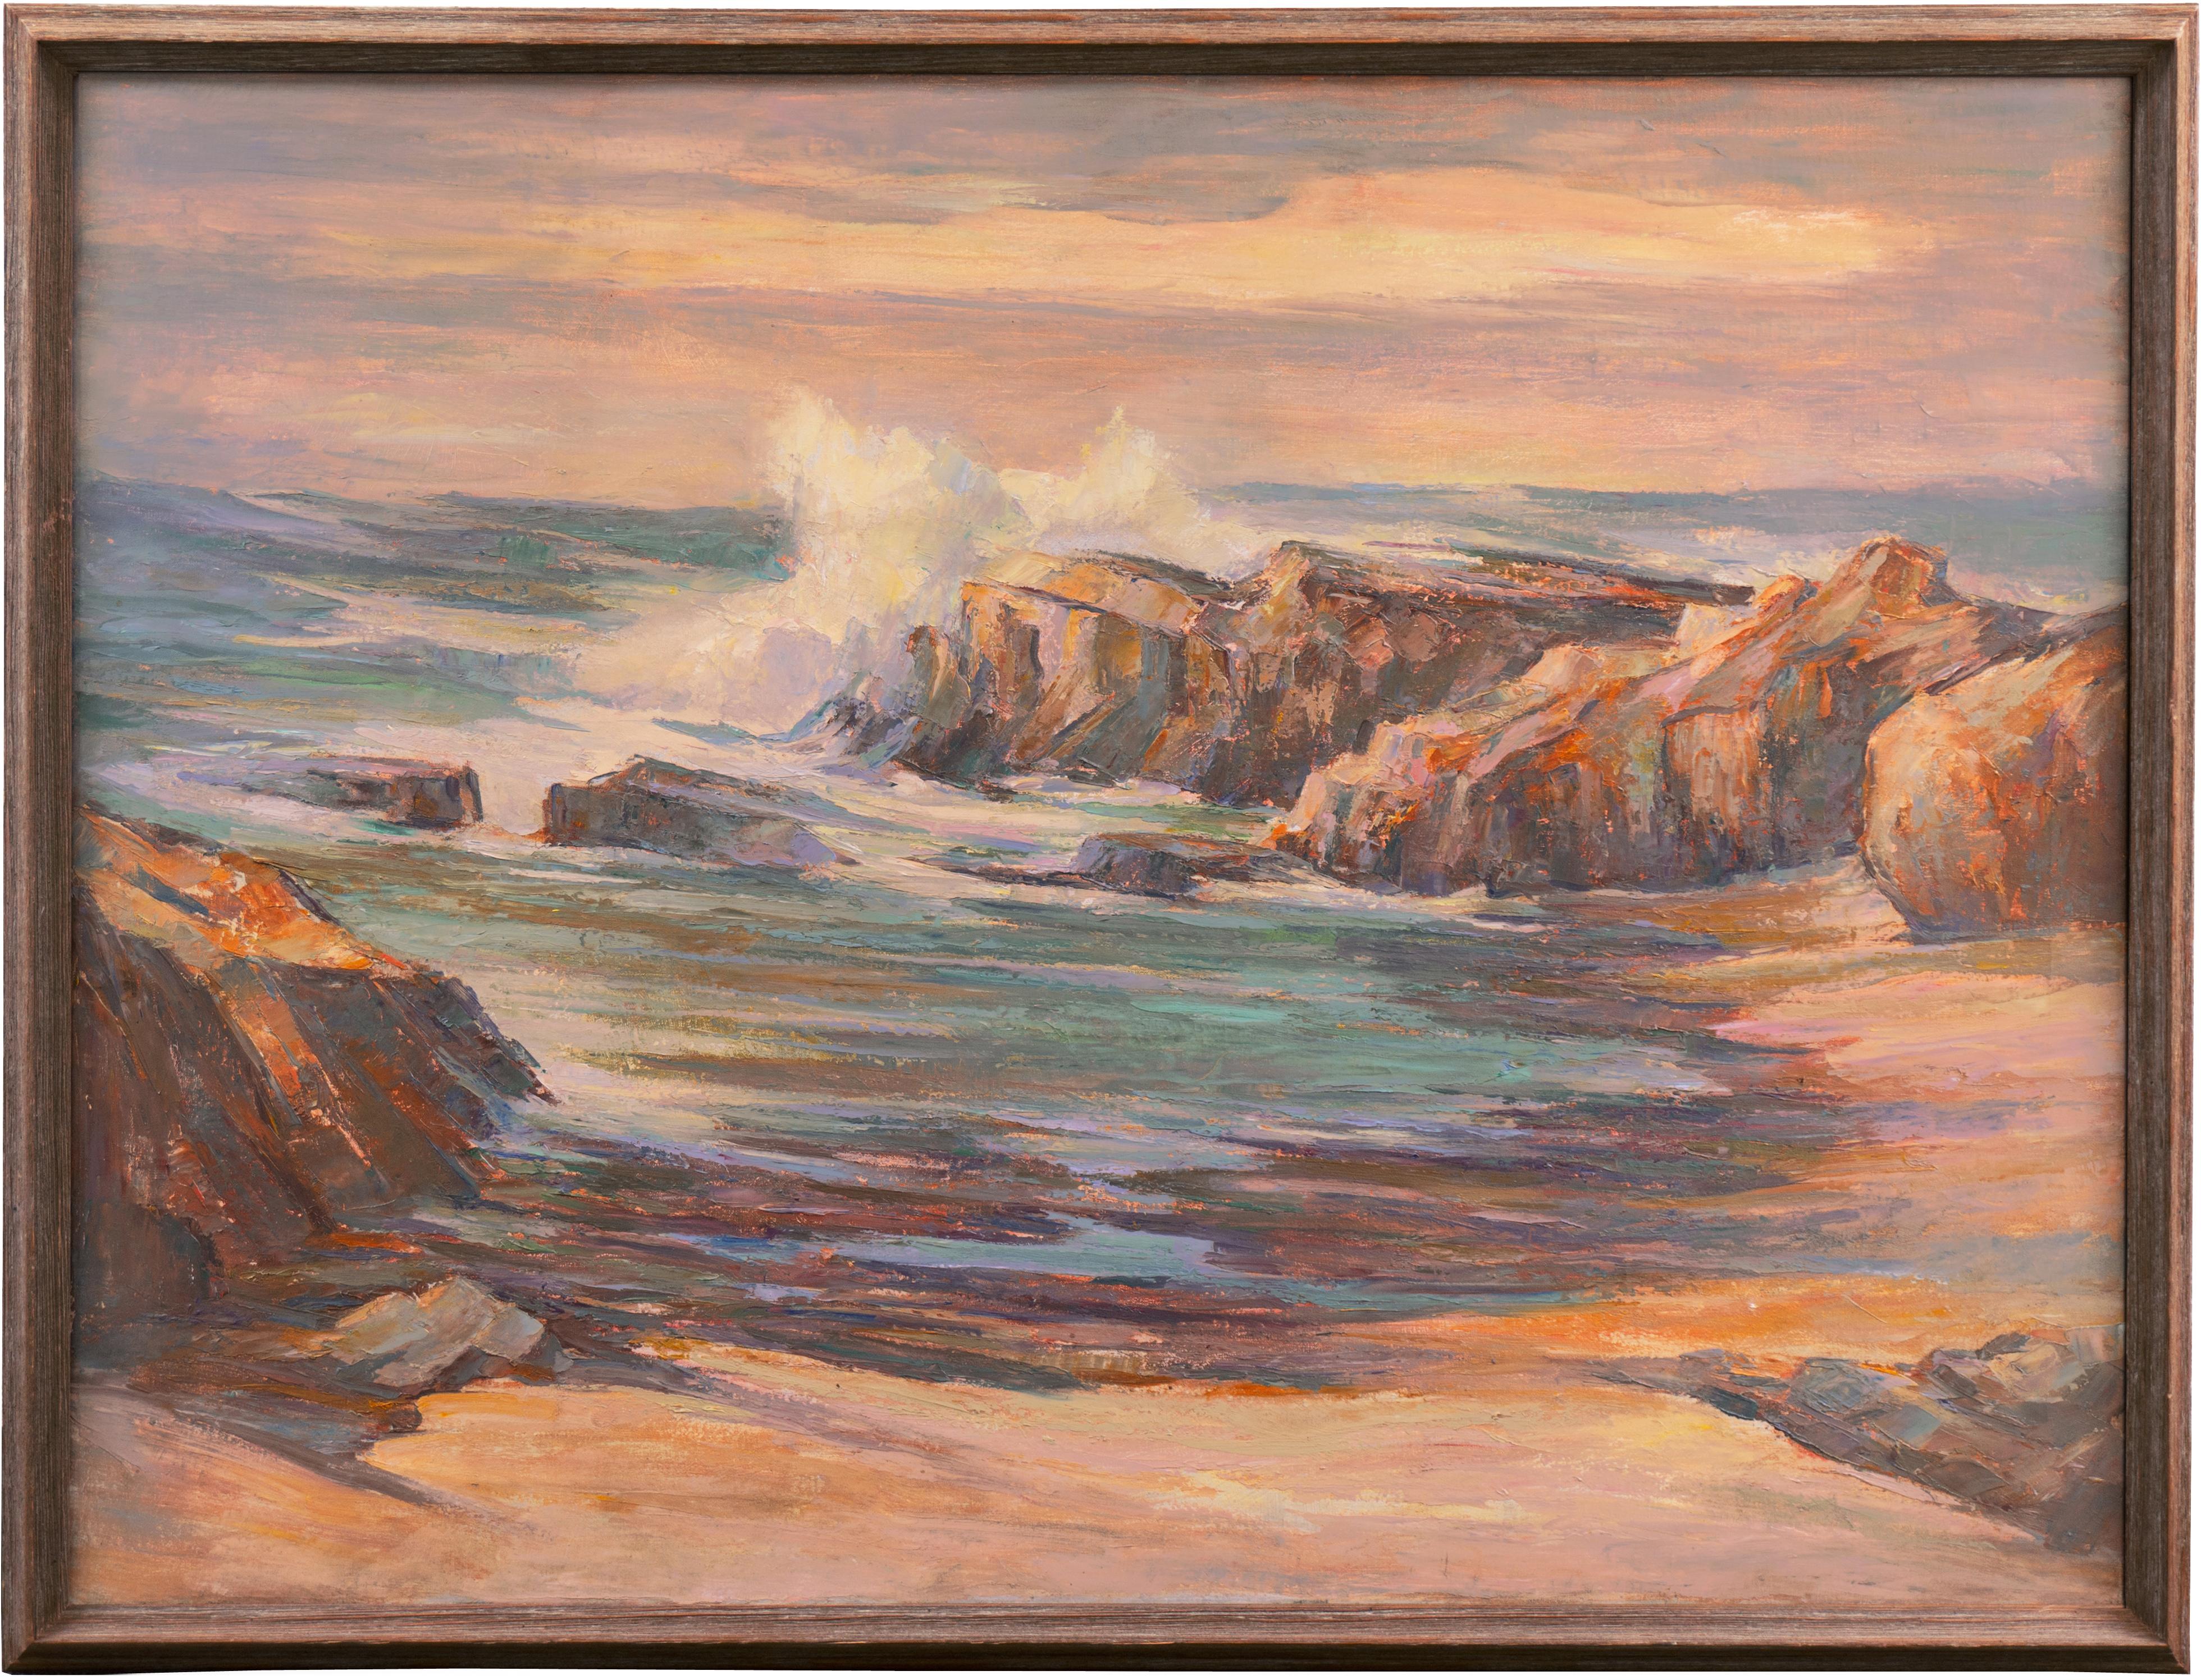 'Pacific Sunset', Oil Seascape, San Francisco Bay Area,  Santa Cruz Art League